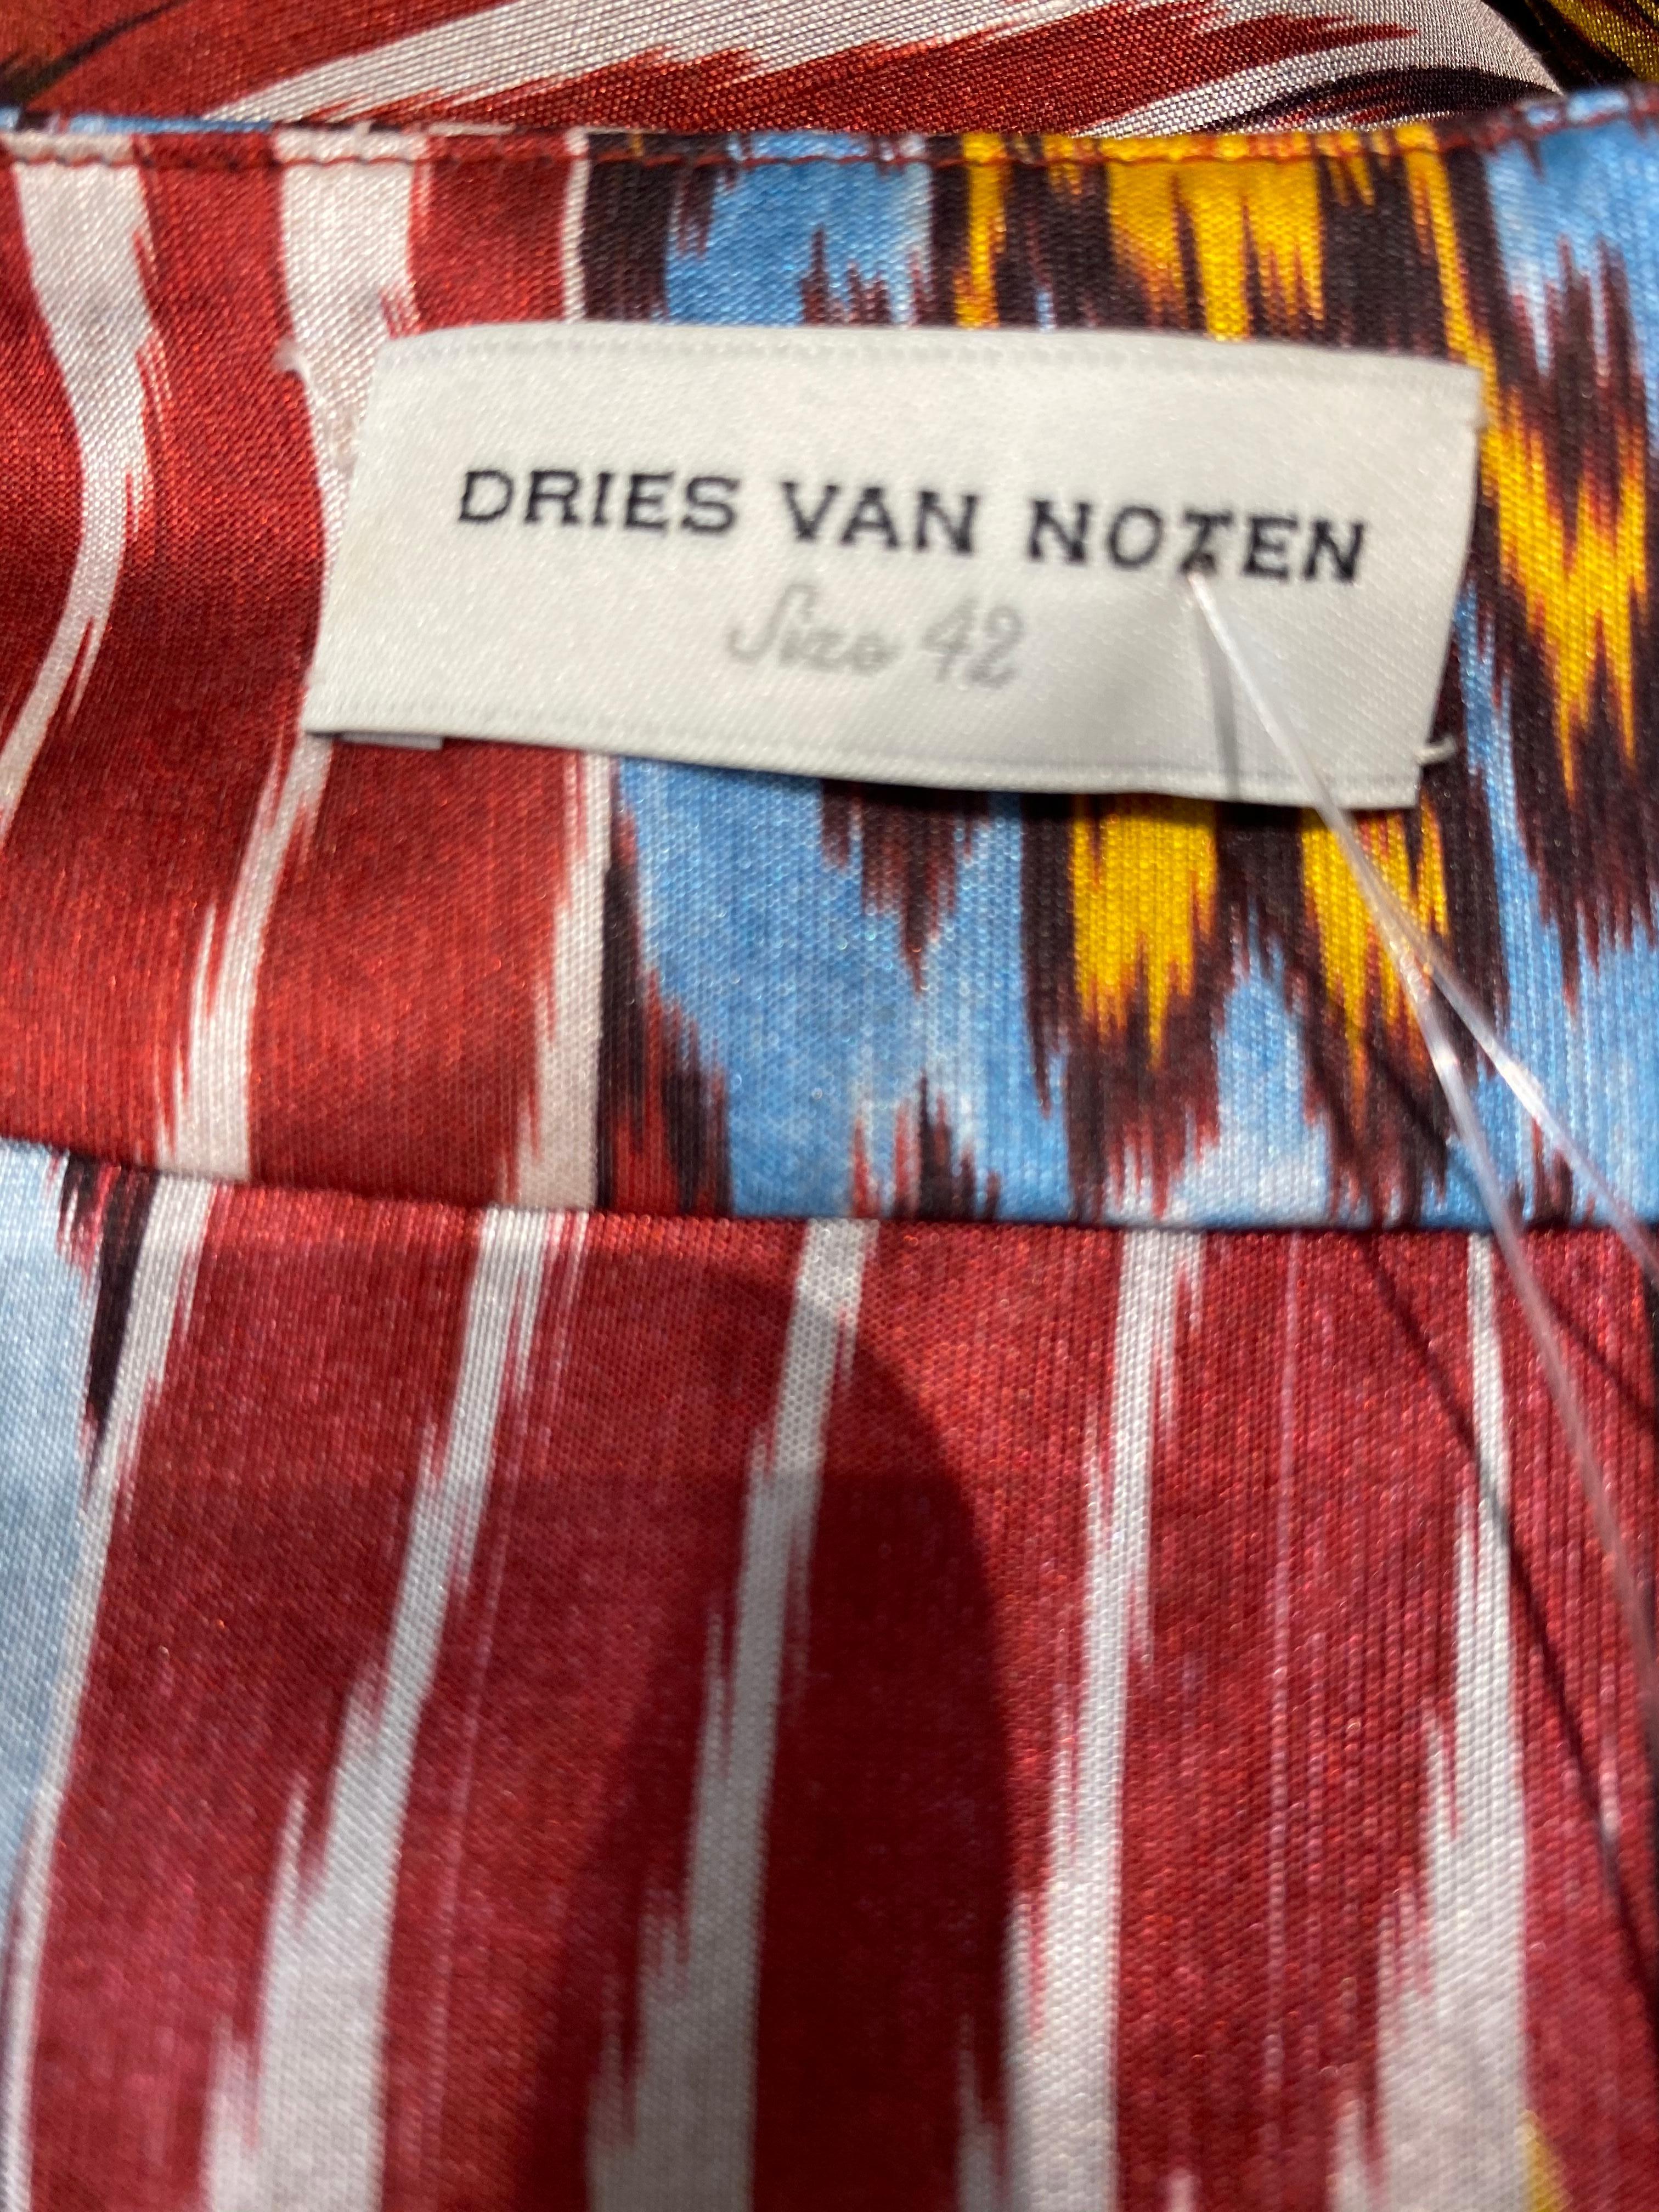 Dries Van Noten Ikat Print Silk Dress In Excellent Condition For Sale In Beverly Hills, CA